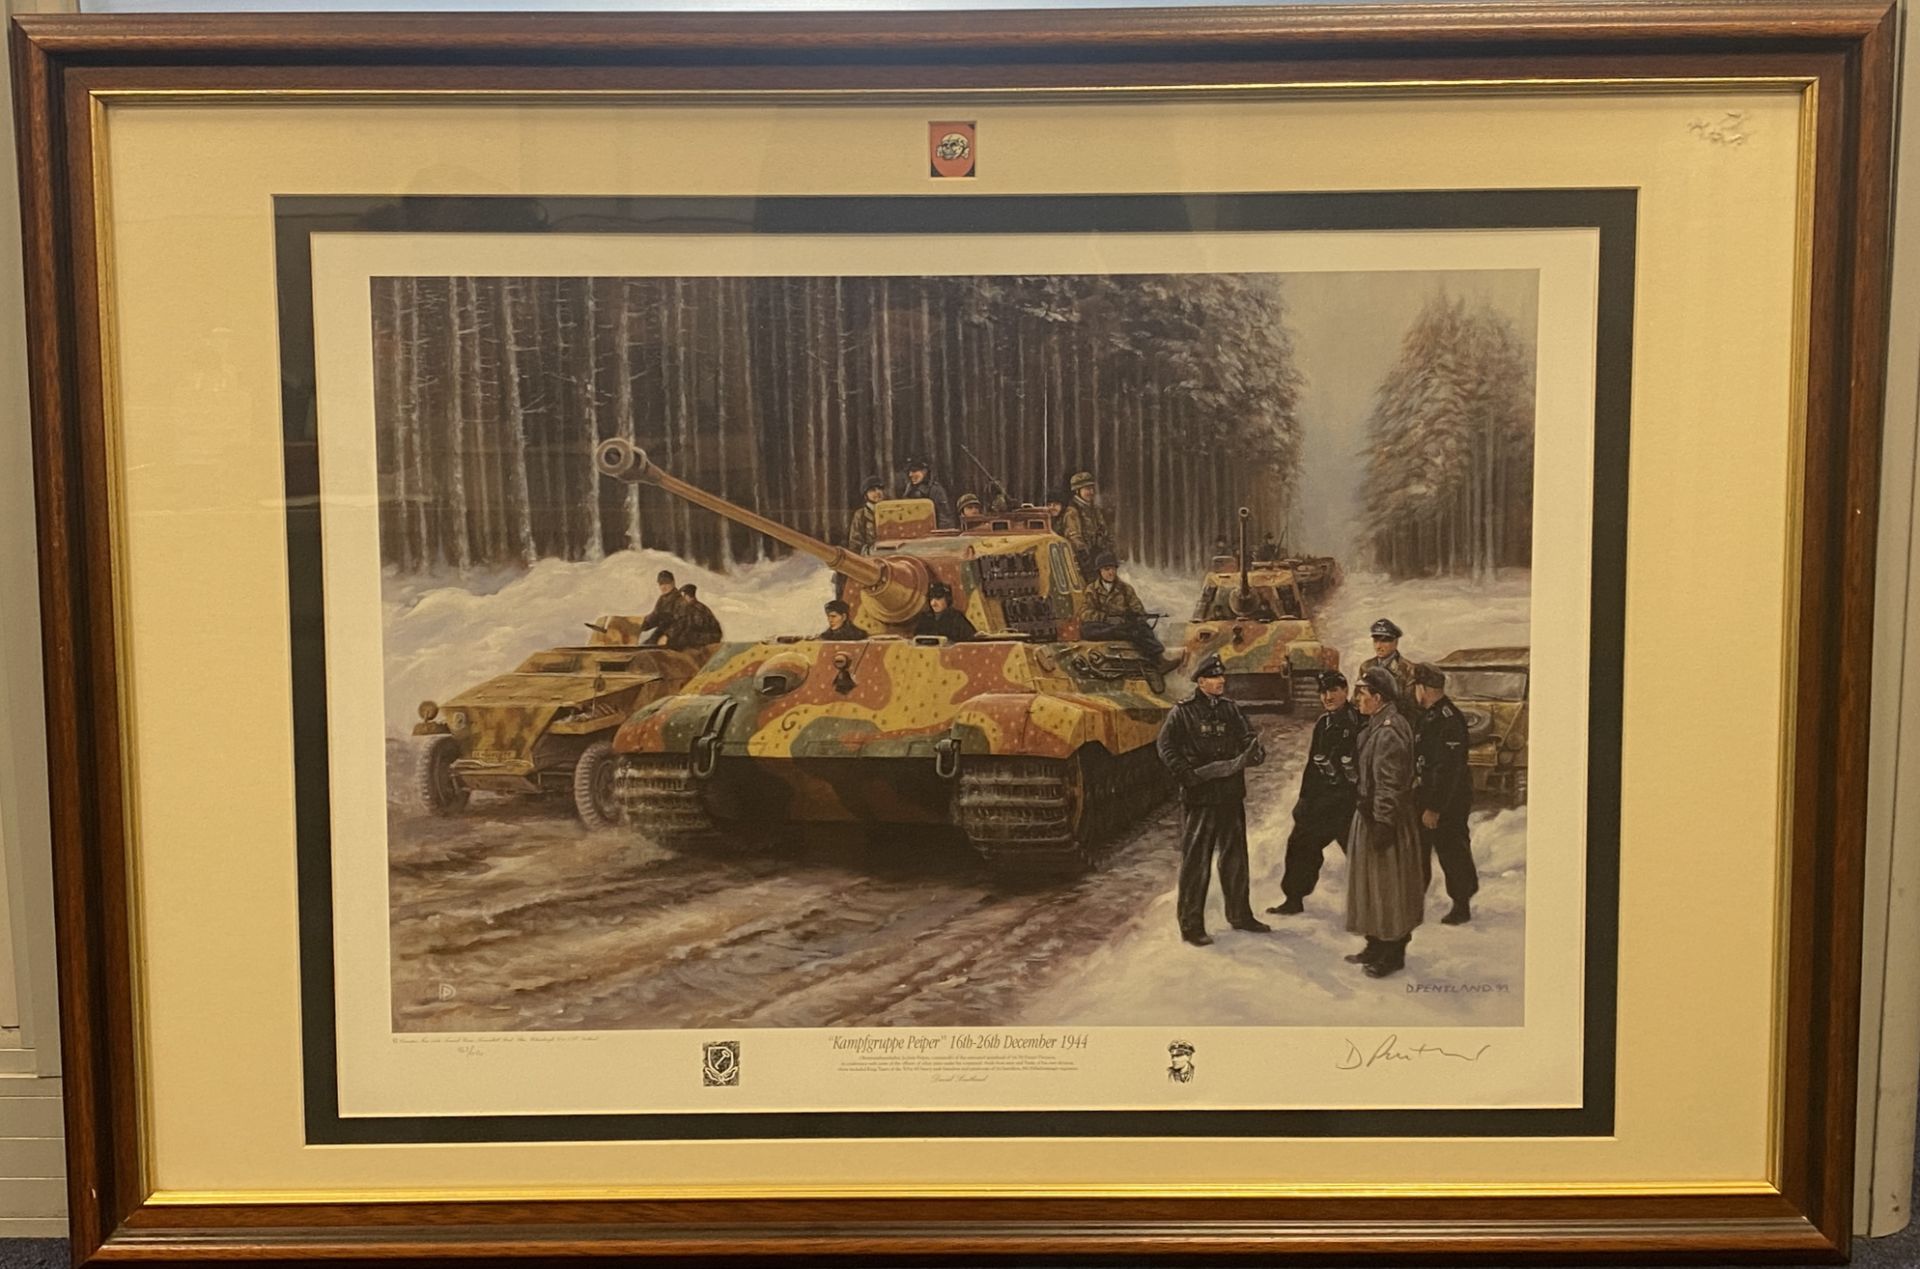 D Pentland '99 Kampfgruppes Reiper' 16th-26th December 1944 framed Limited Edition print,